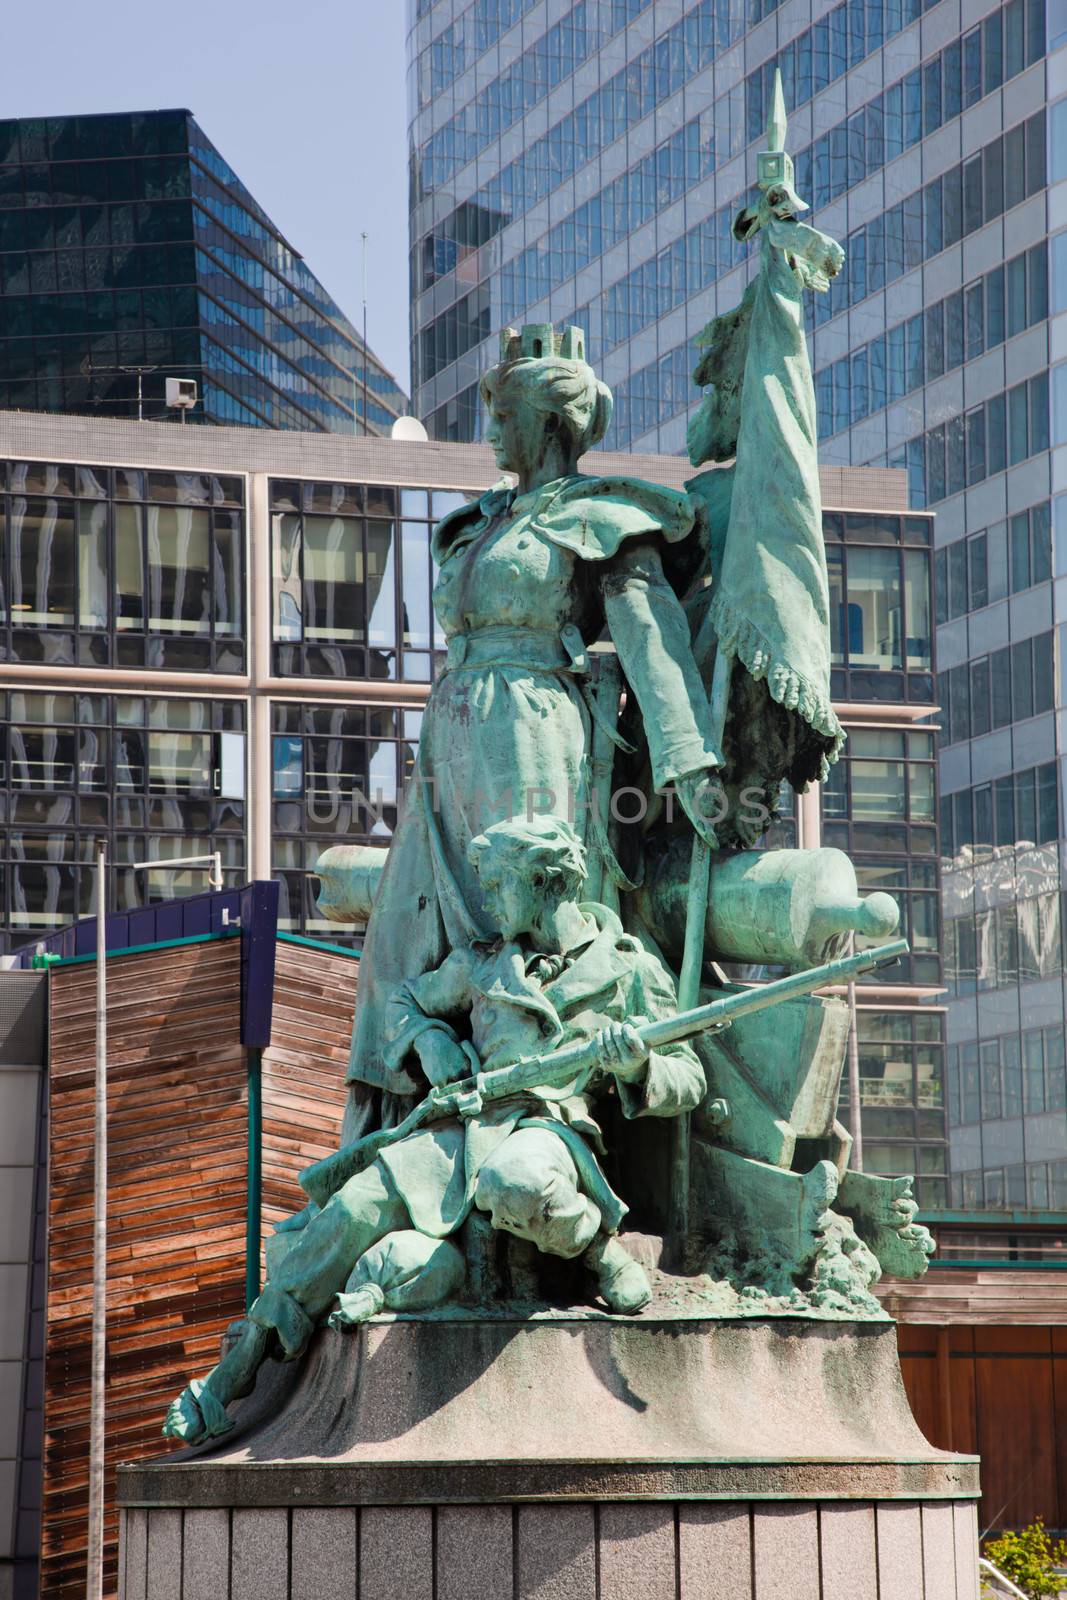 Statue in La Defense, the financial district in Paris, France.